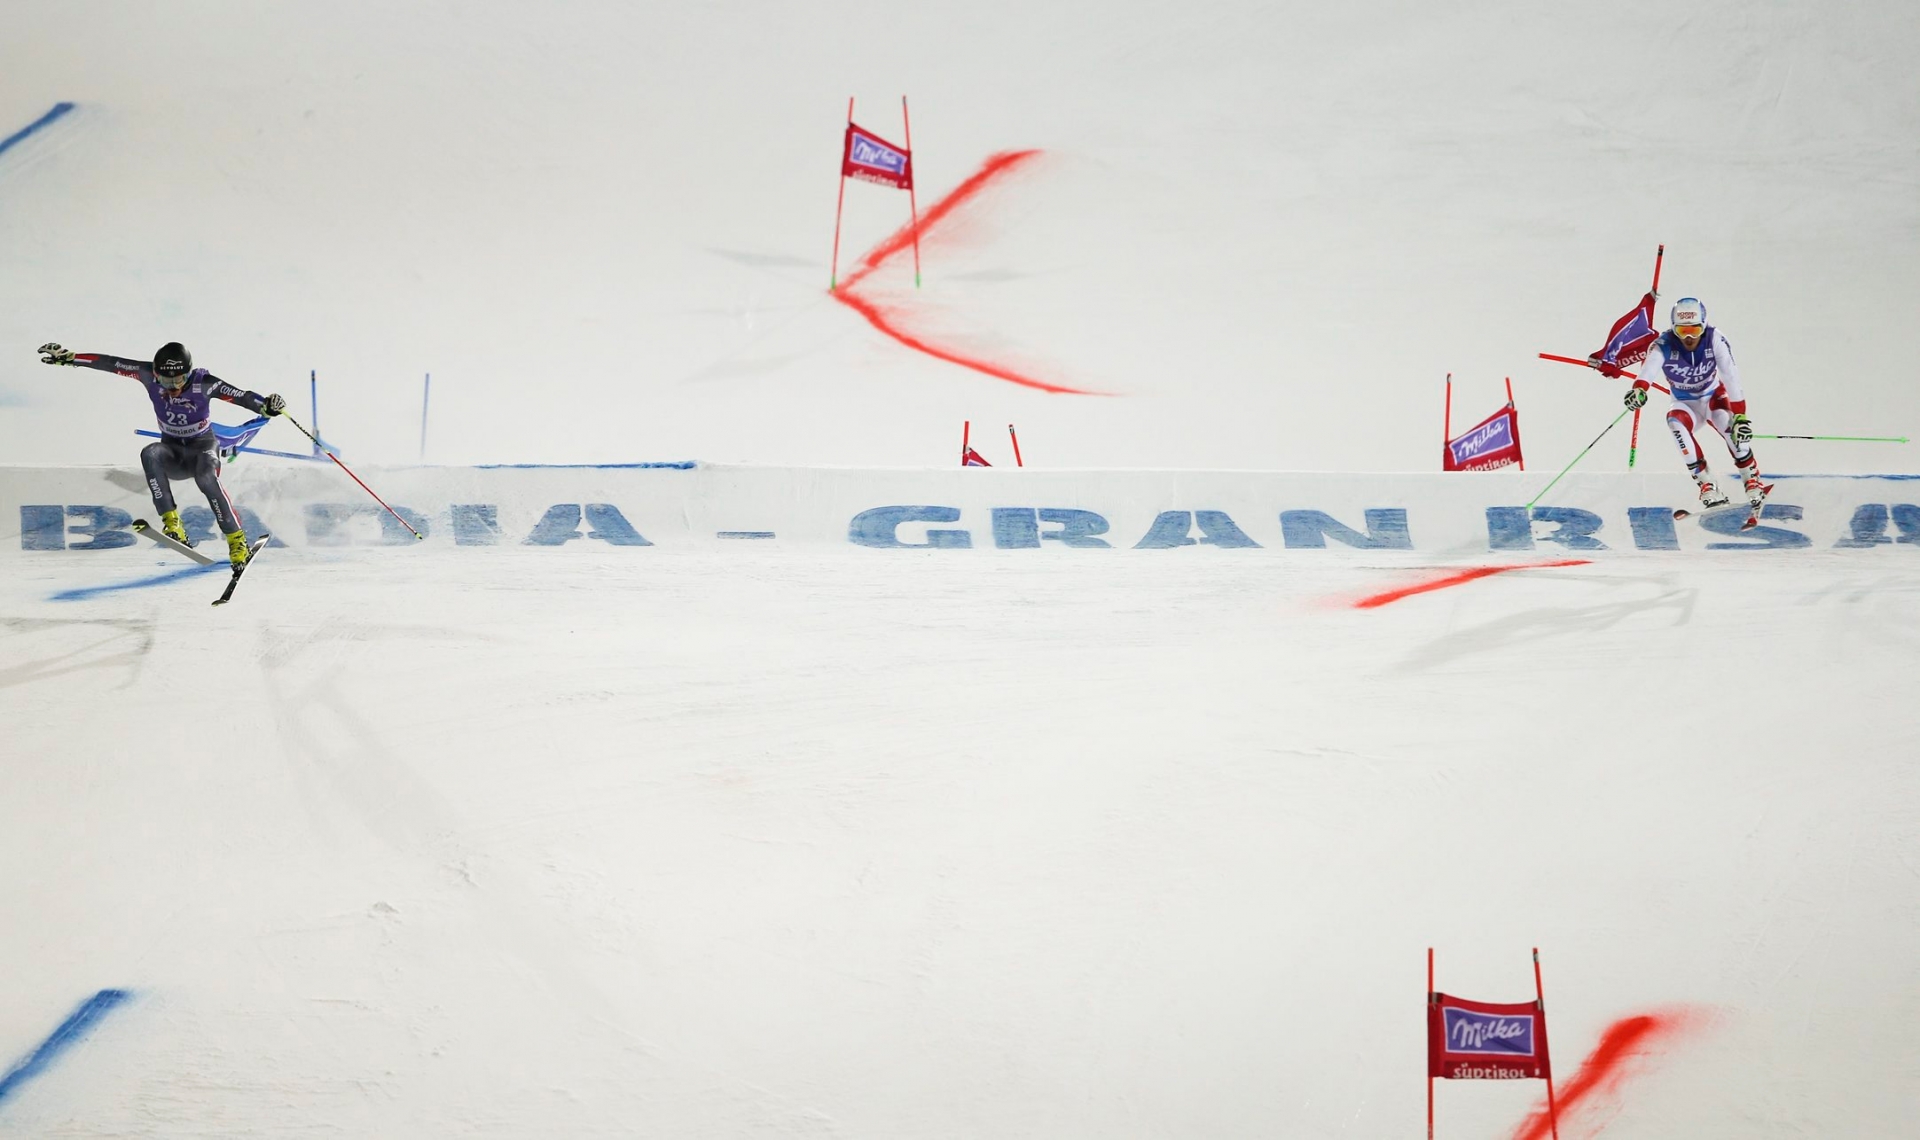 France's Cyprien Sarrazin, left, competes alongside Switzerland's Carlo Janka on his way to win an alpine ski, men's World Cup giant slalom, in Alta Badia Italy, Sunday Dec. 18, 2016. (AP Photo/Marco Trovati) Italy Alpine Skiing World Cup